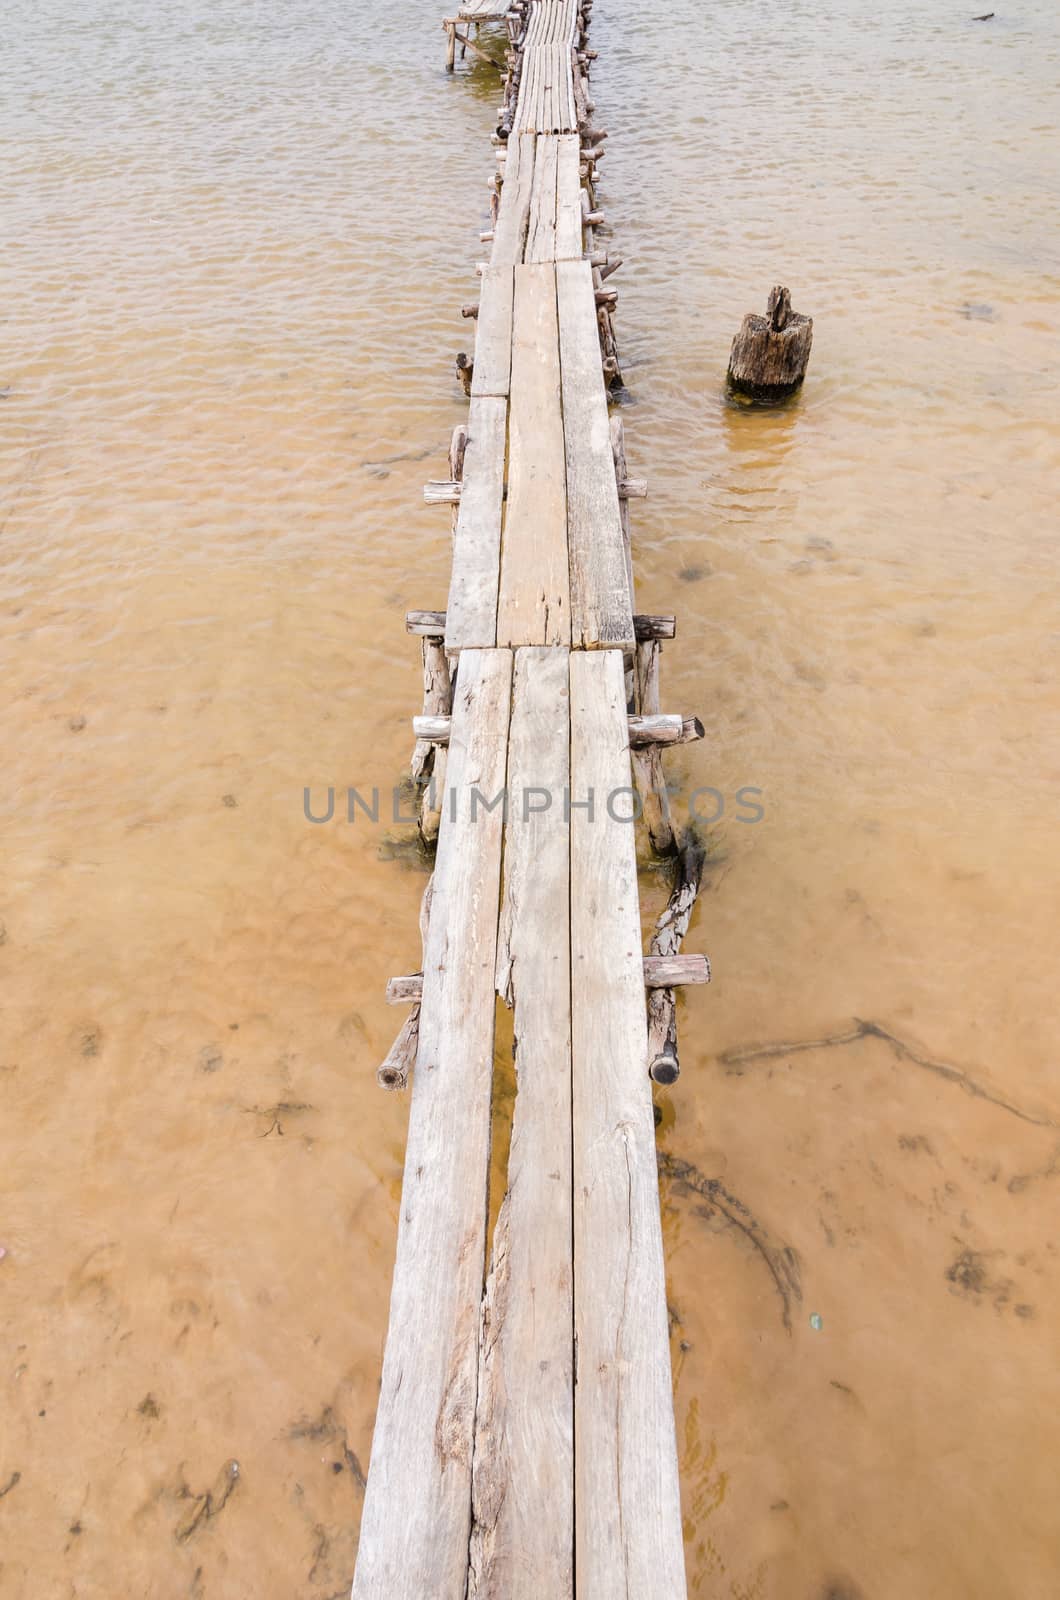 wood brigde water in the Reservoir by sweetcrisis